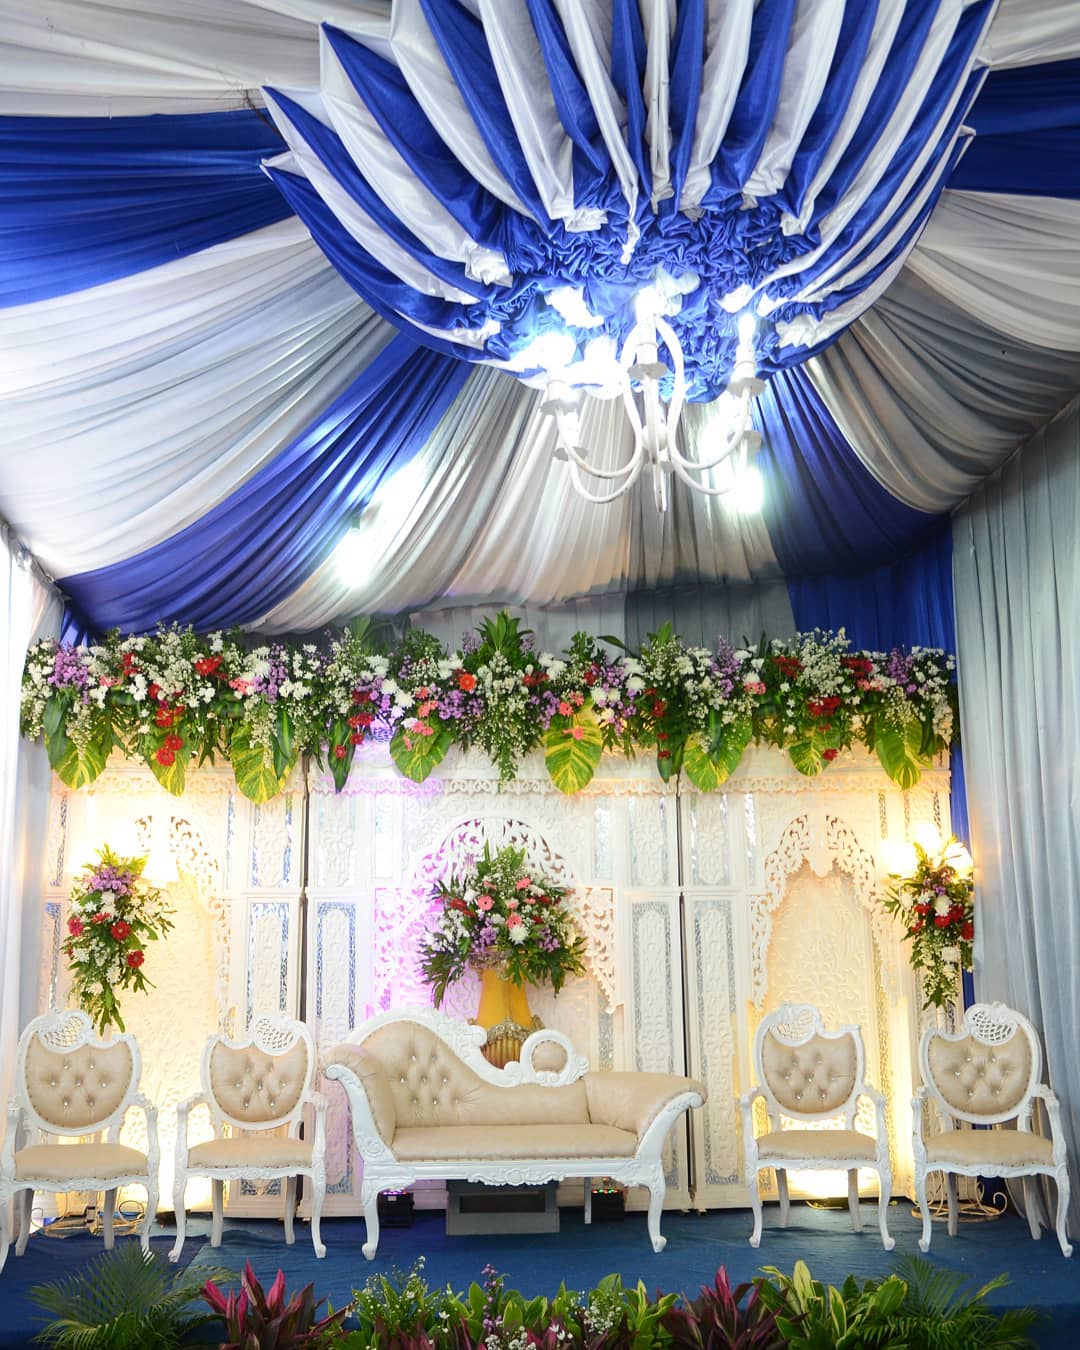  Harga Paket Pernikahan 2019 HANNA RIAS PENGANTIN DI JAKARTA